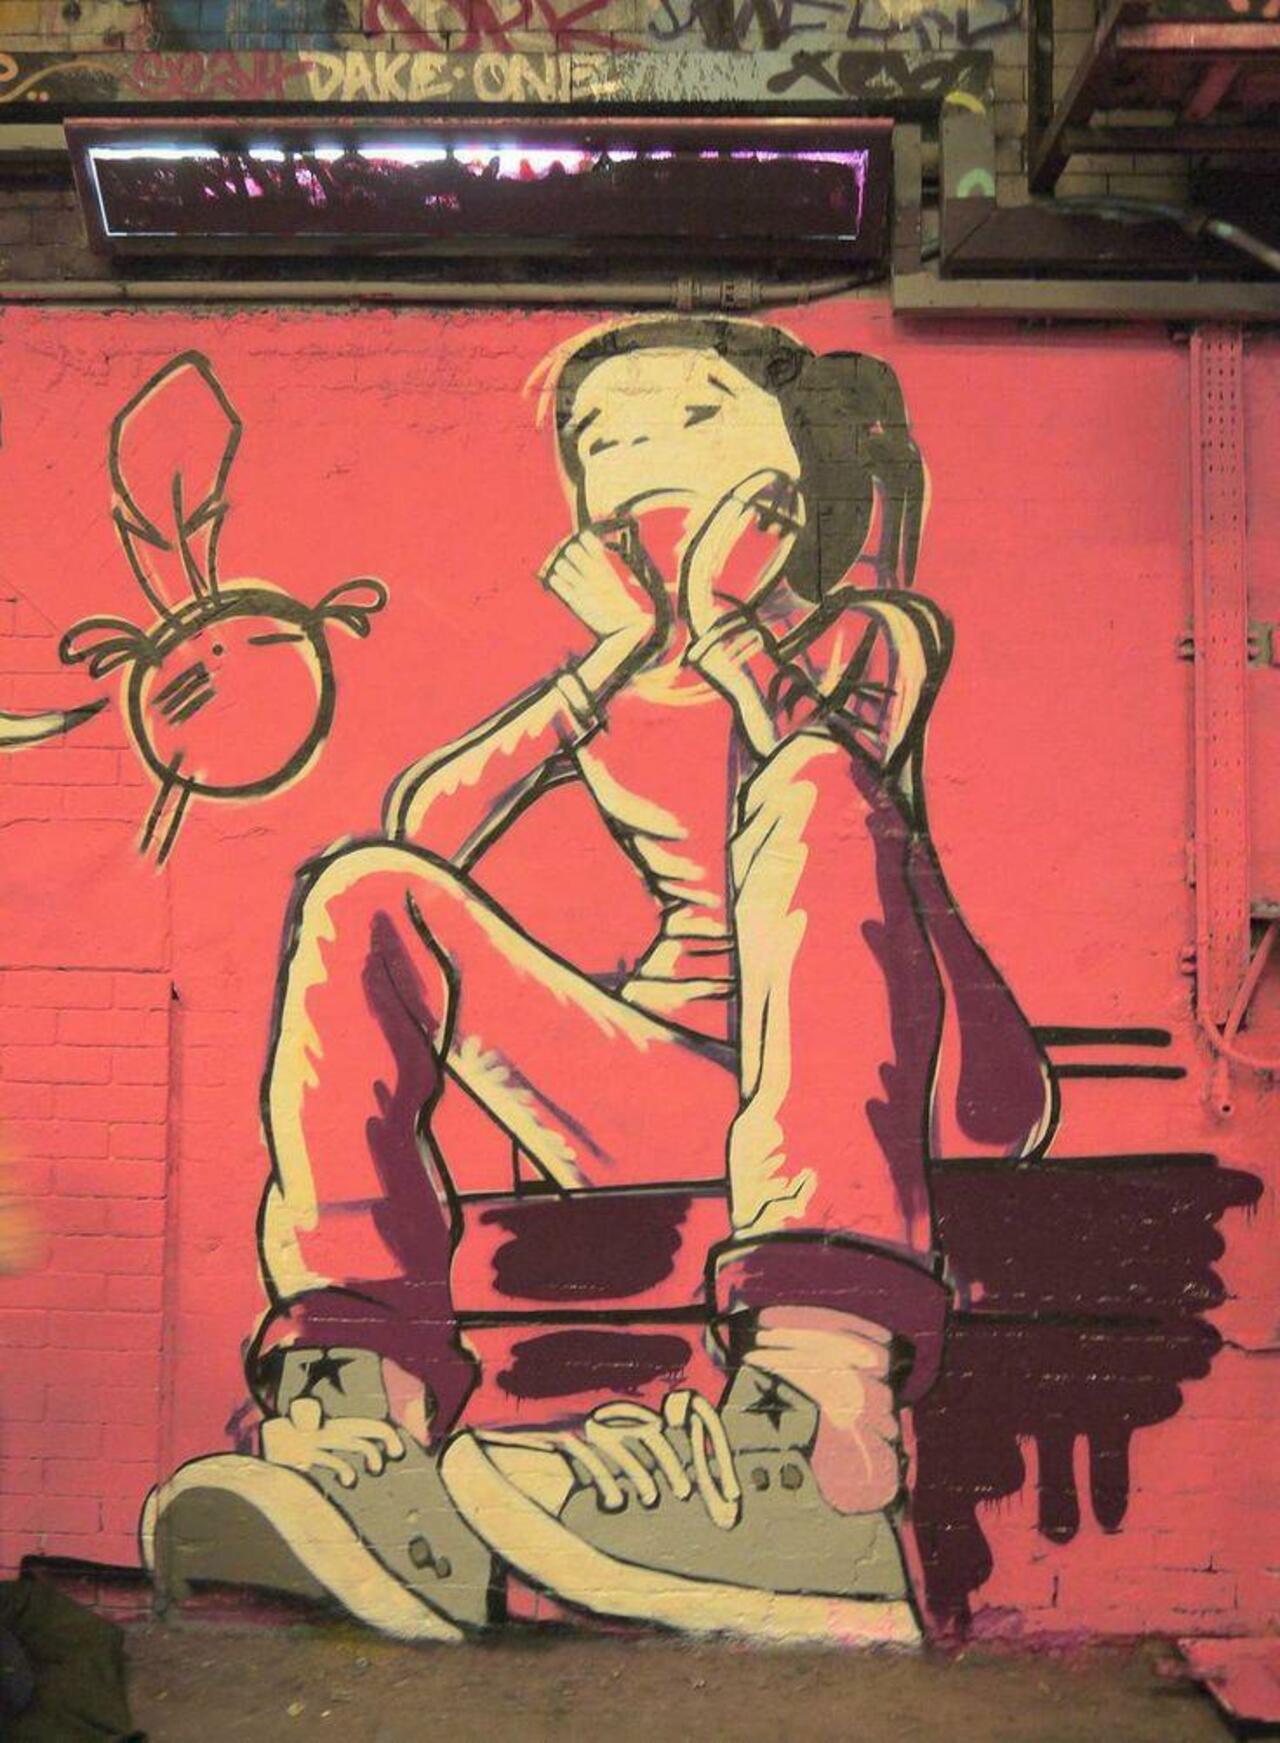 “@mikecooln: “@StreetArtBuzz: Roo's https://twib.in/l/X95K4AbedkA #art #design #graffiti http://t.co/LZtB3DxCpA””